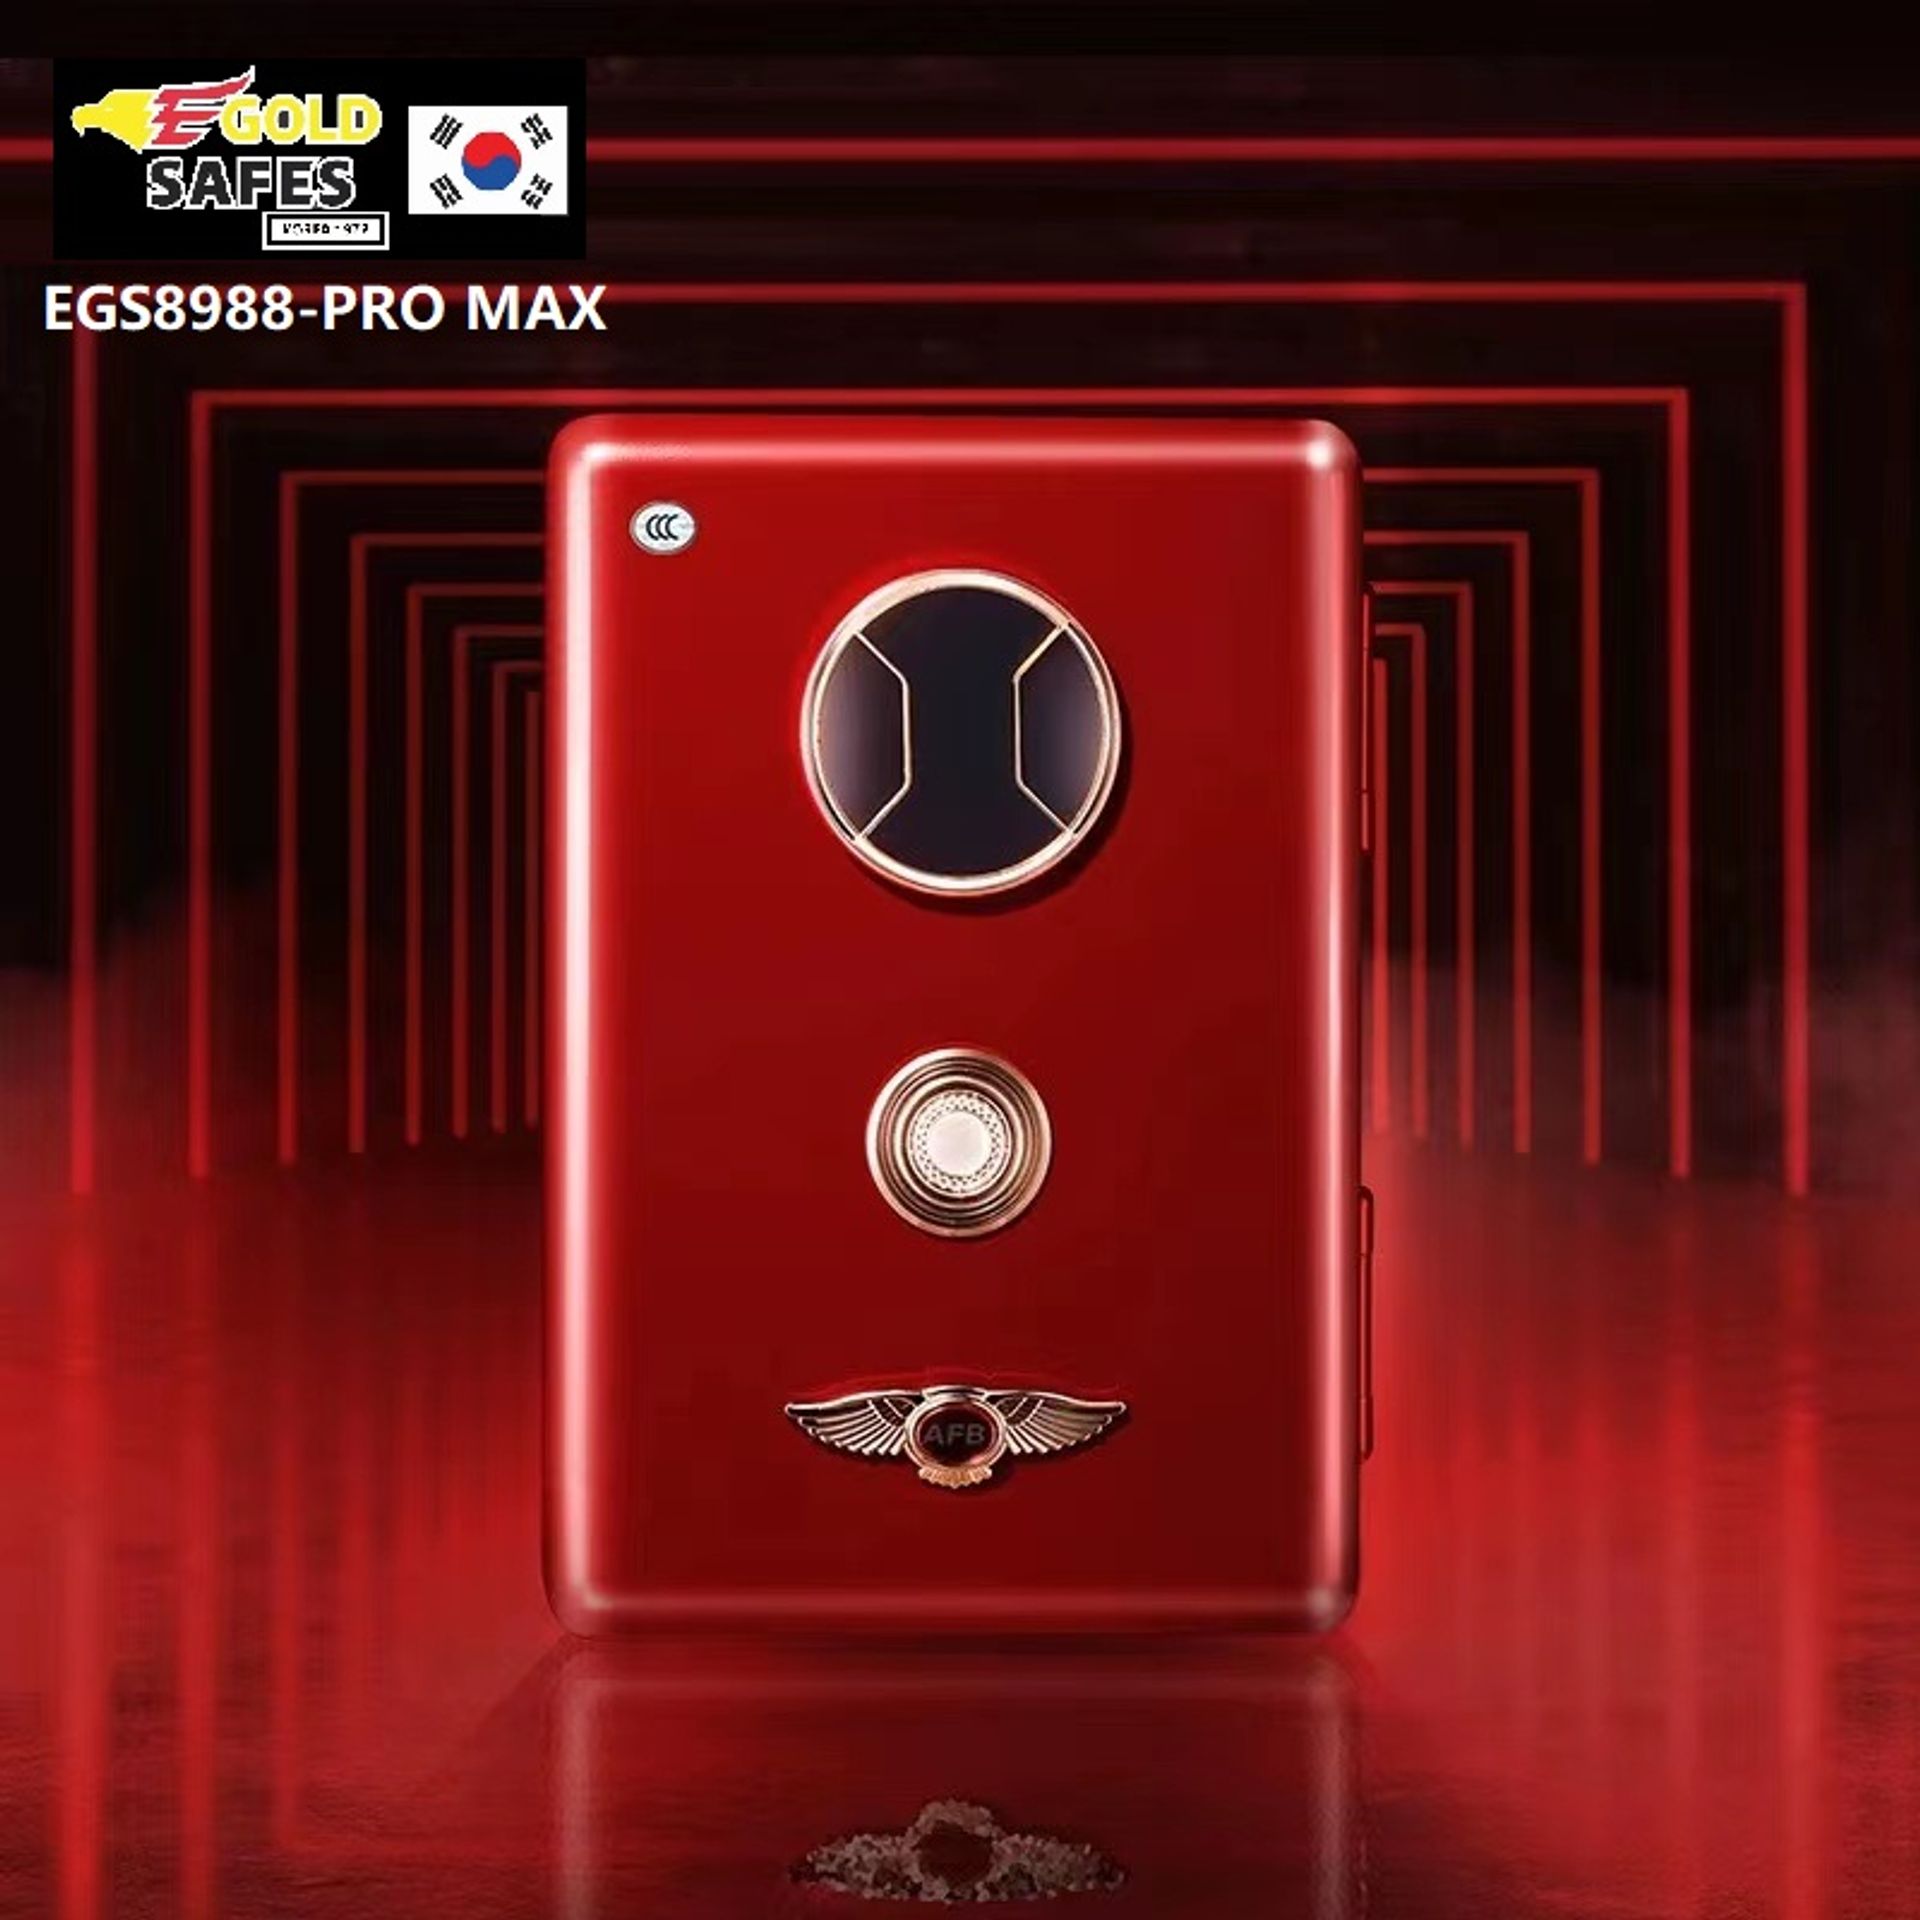 MODEL:EGSS8988-PRO MAX